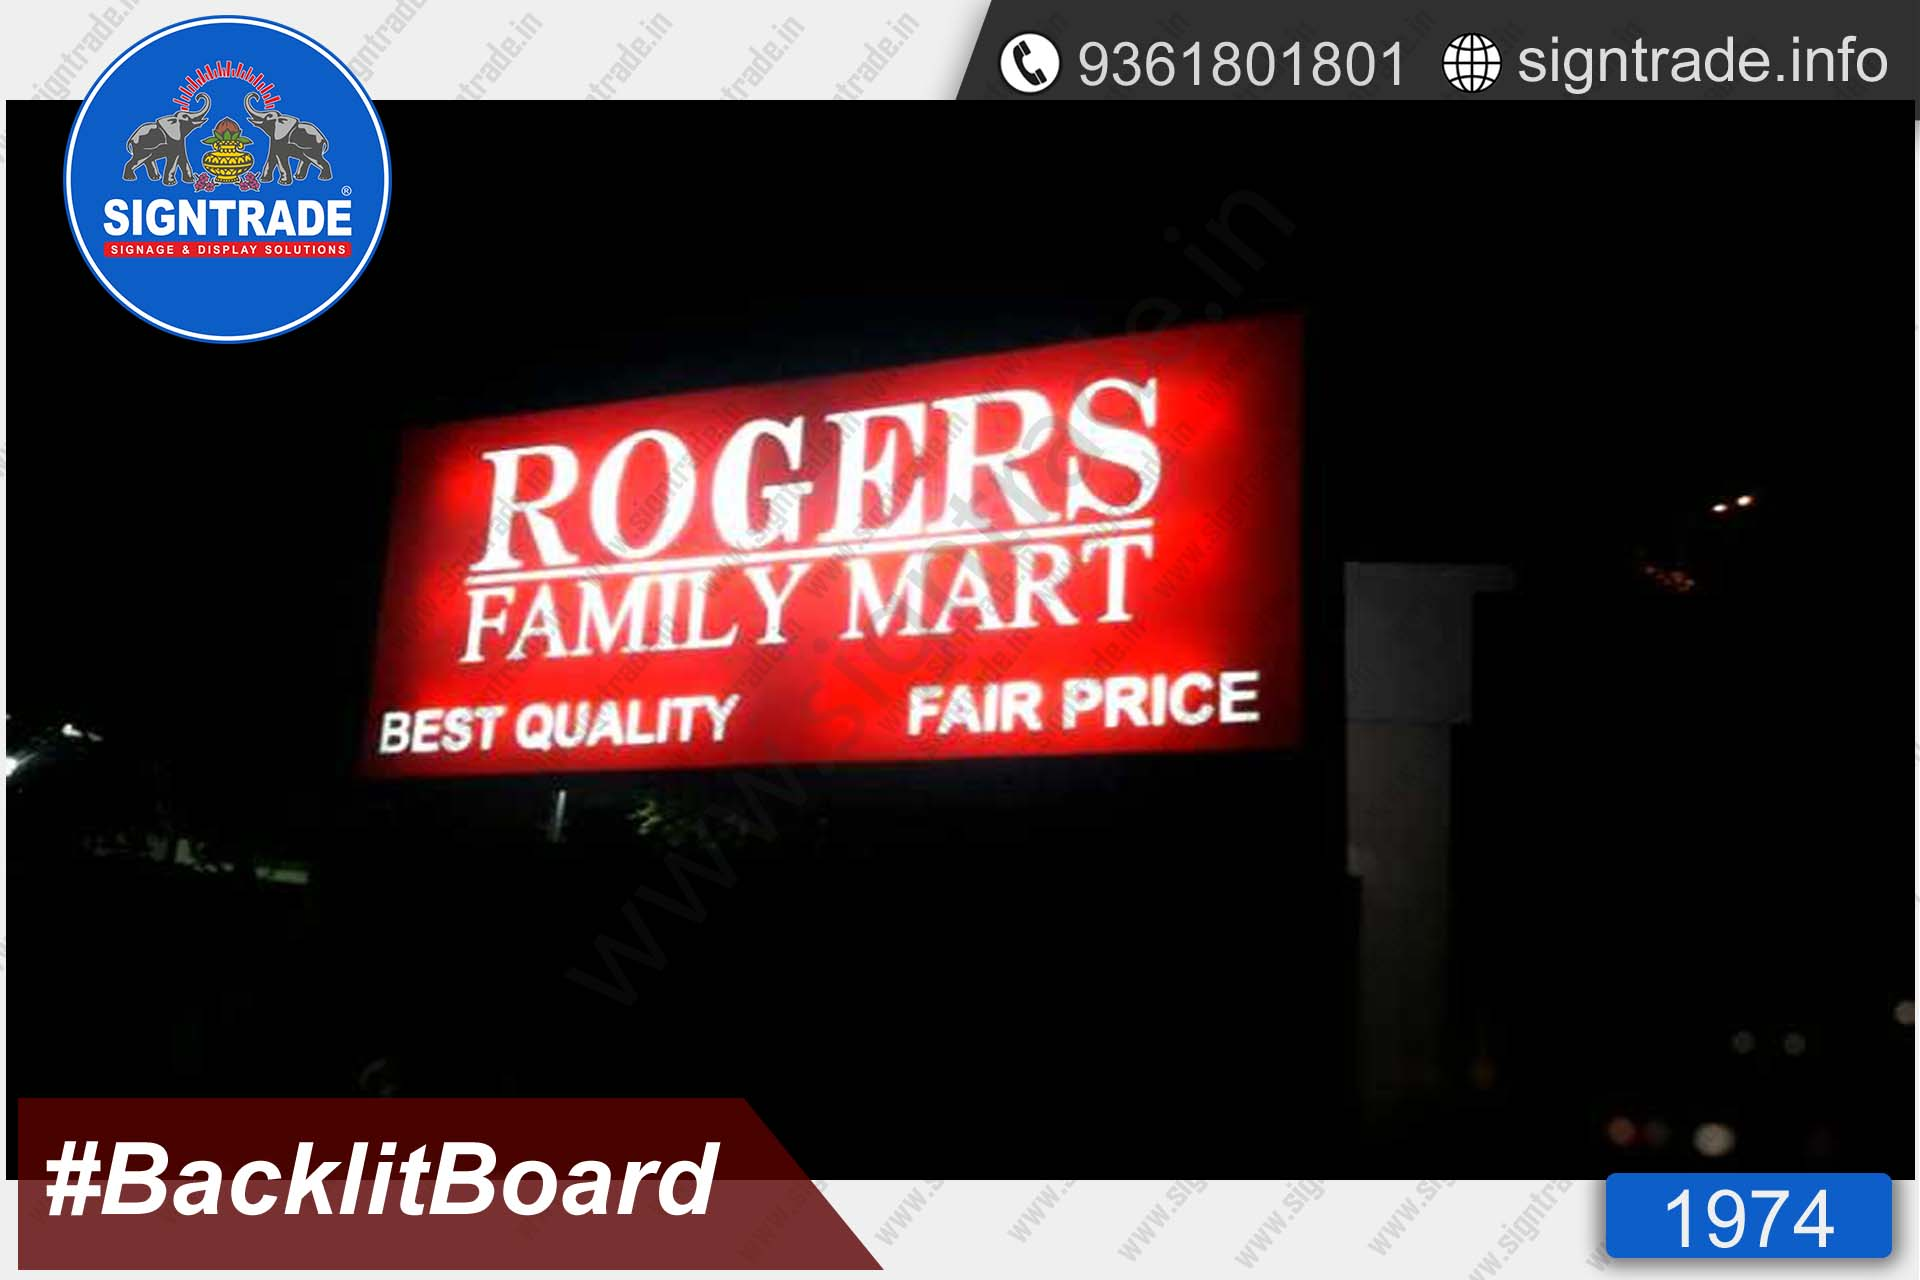 Rogers Family Mart Backlit Board